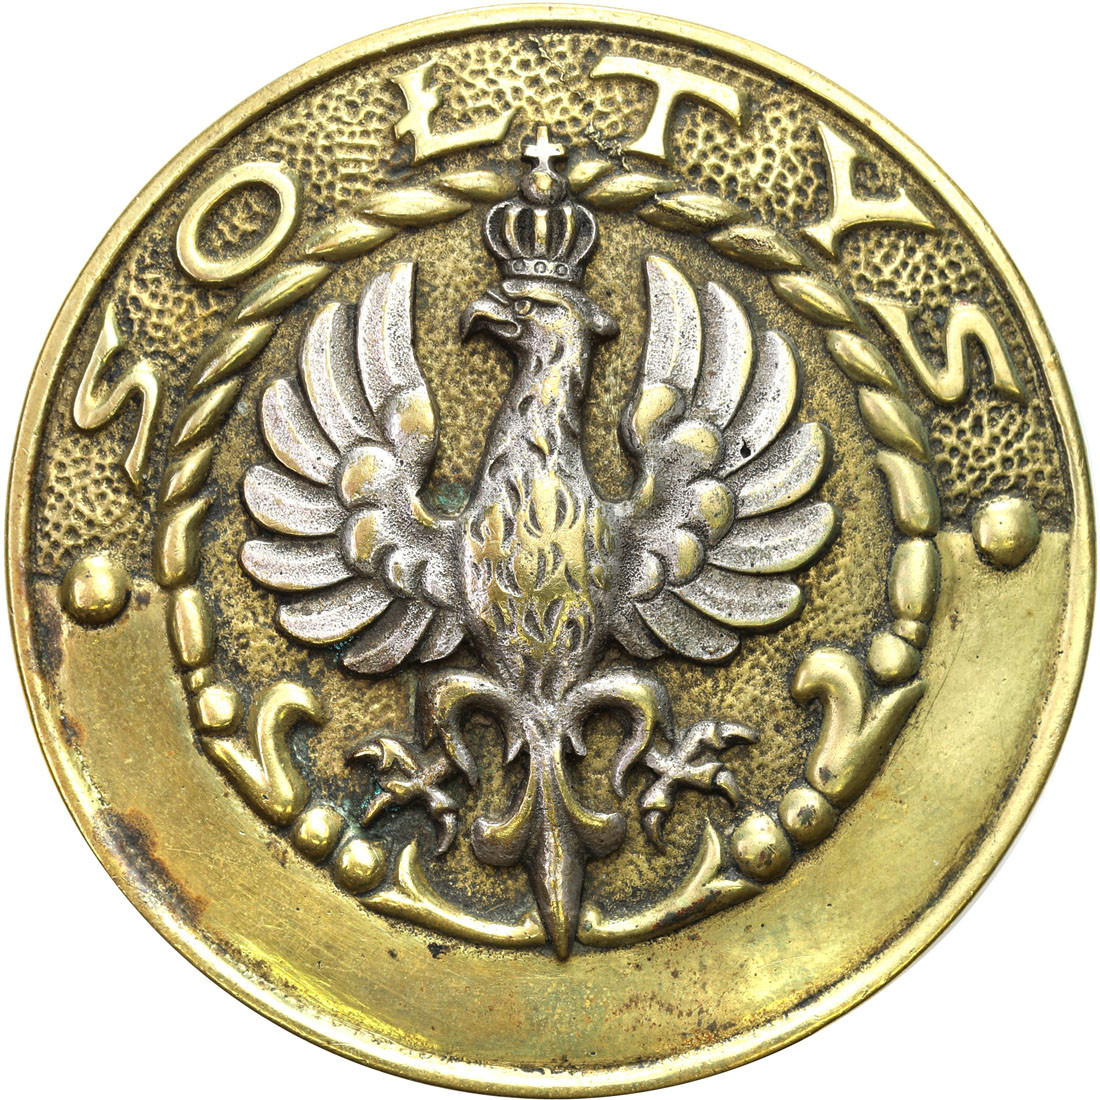 II RP. Odznaka Sołtysa